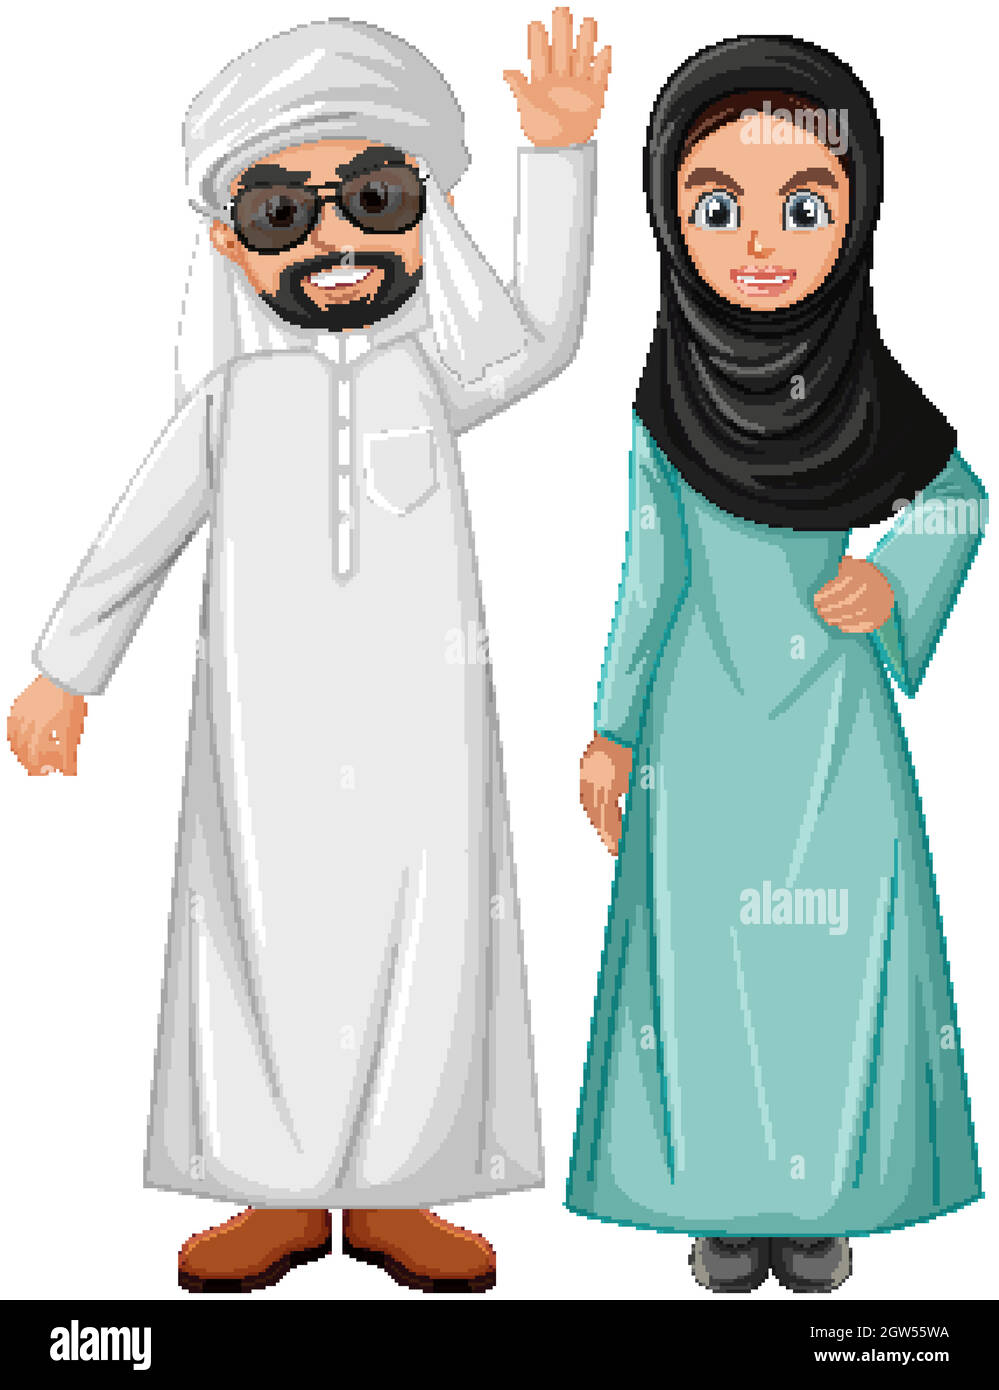 Adult arab couple wearing arab costume character Stock Vector